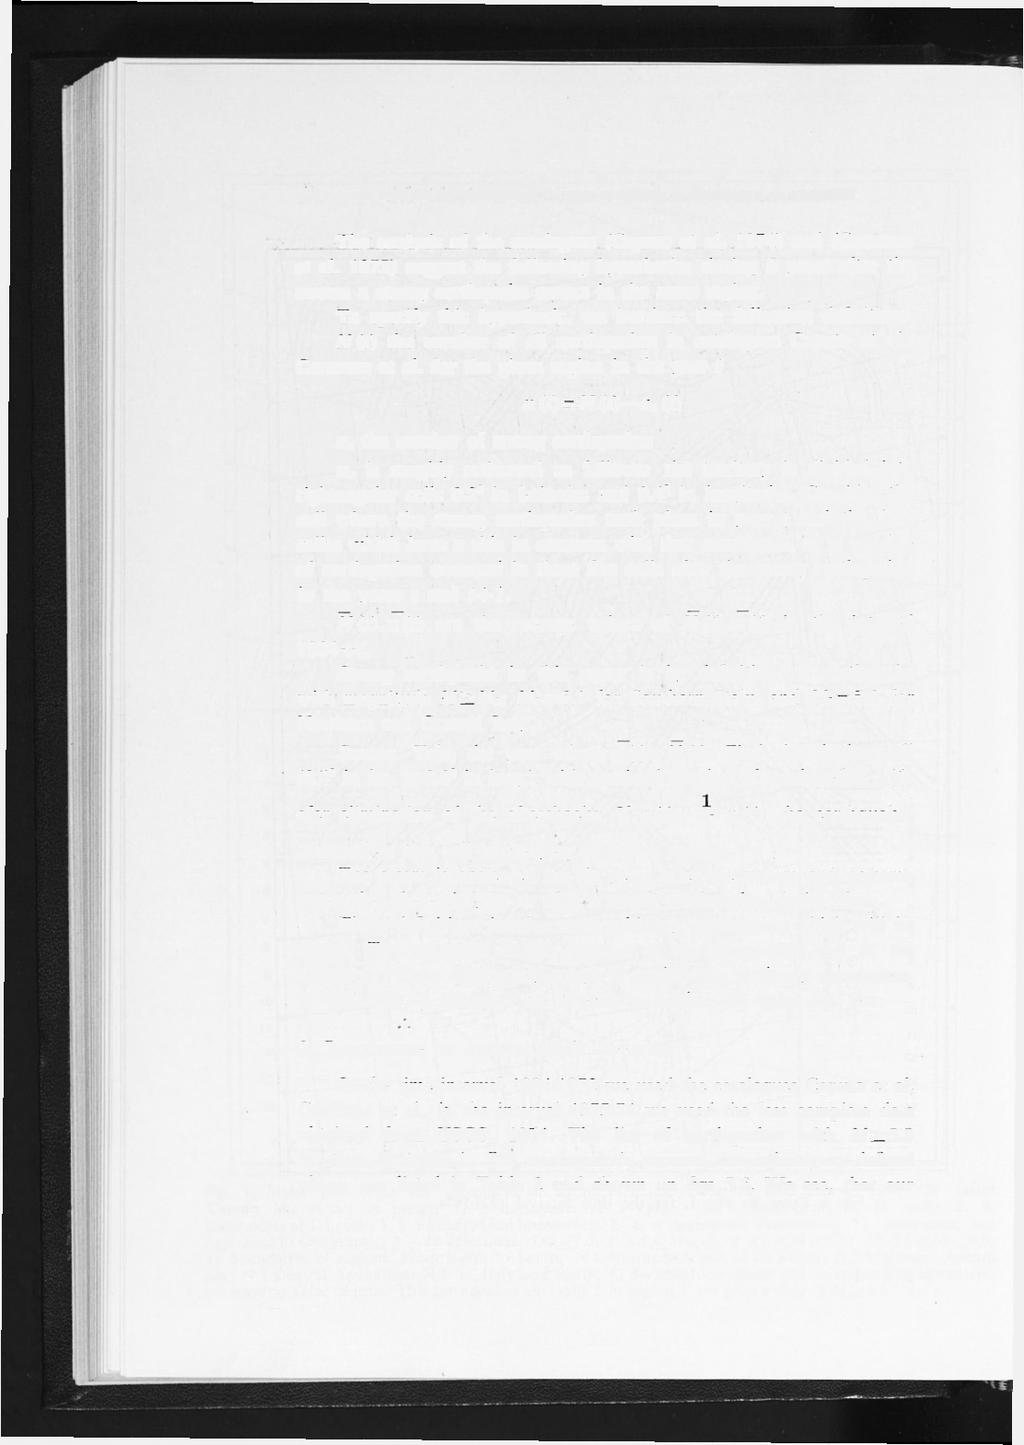 7 M. CAPUTO, P. GASPERINI, V. KEILIS-BOROK, L. MARCELLI, I. ROTWAIN The analysis of the catalogues (Caputo et al, 1974) and (Carrozzo et al.